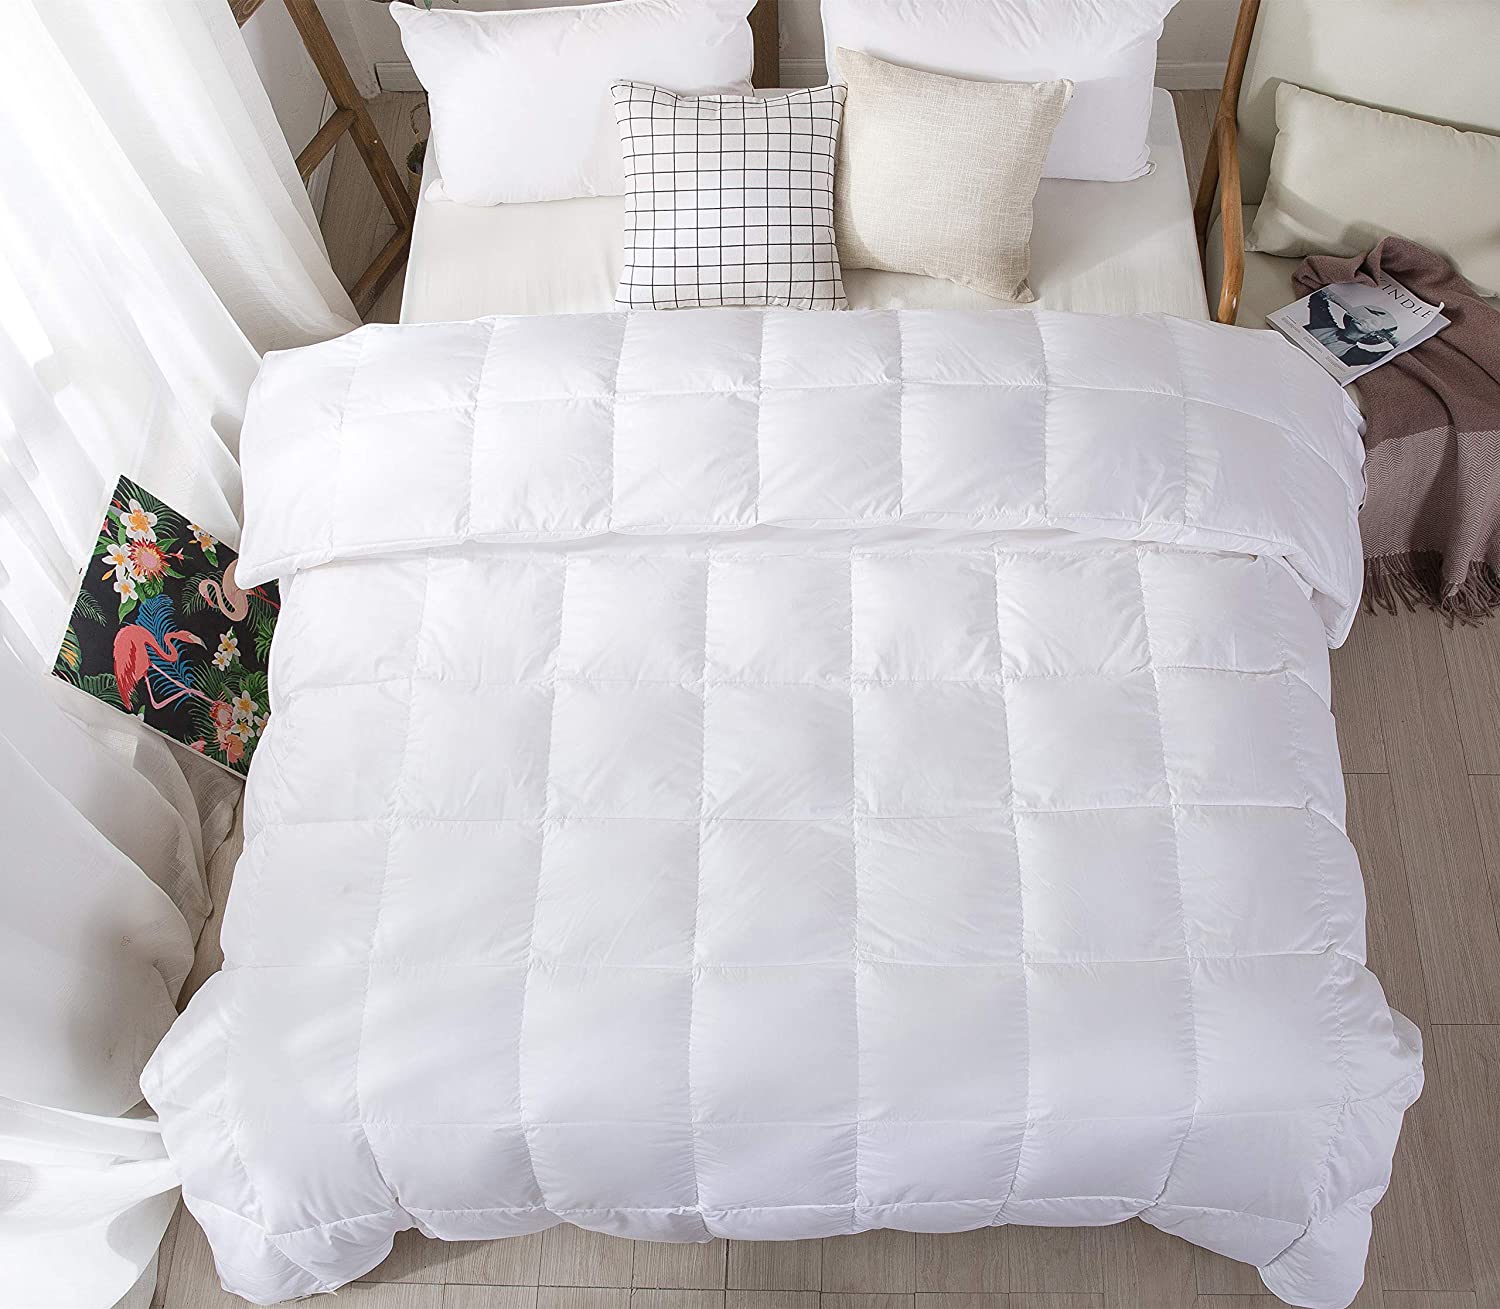 Hs79 down Blanket Bed Blanket Duvet Down Feather Blanket 100% Natural 200x200 1400g 